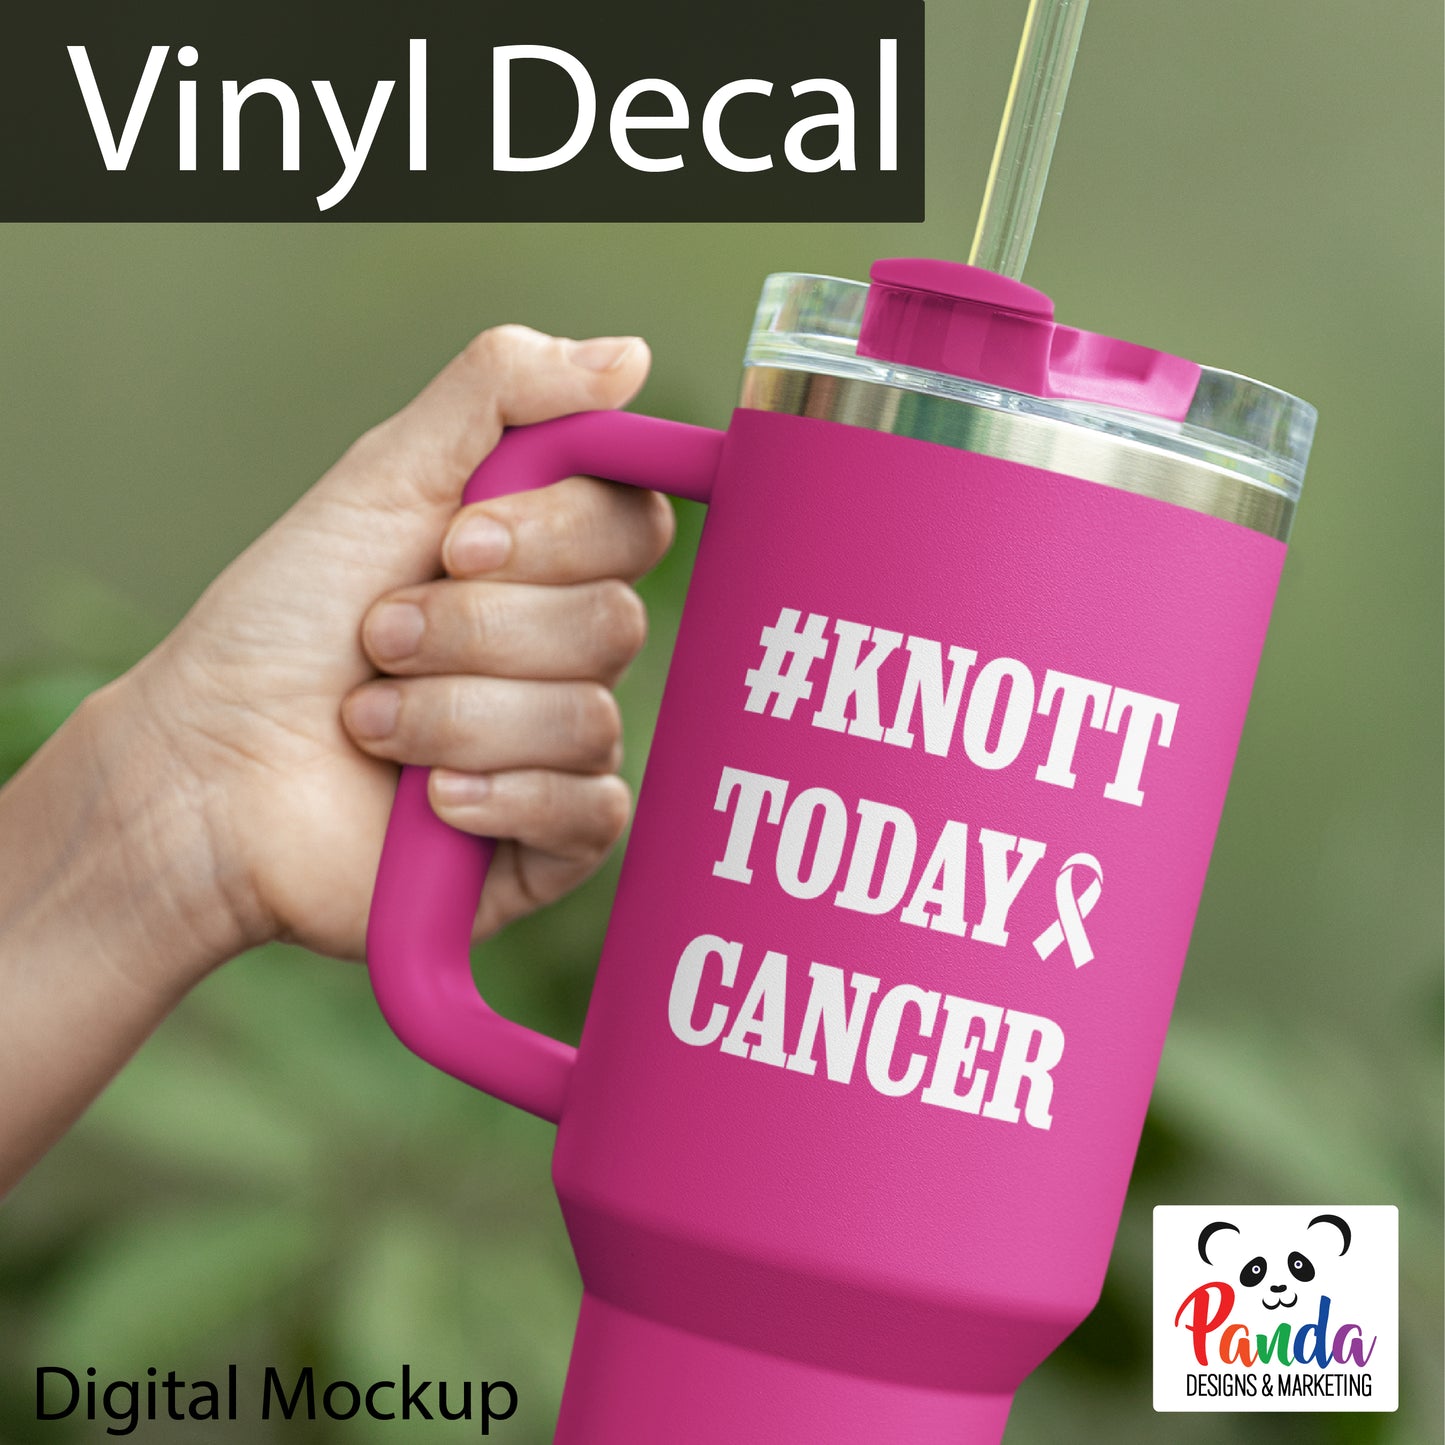 Knott Today Cancer Vinyl Decal Sticker